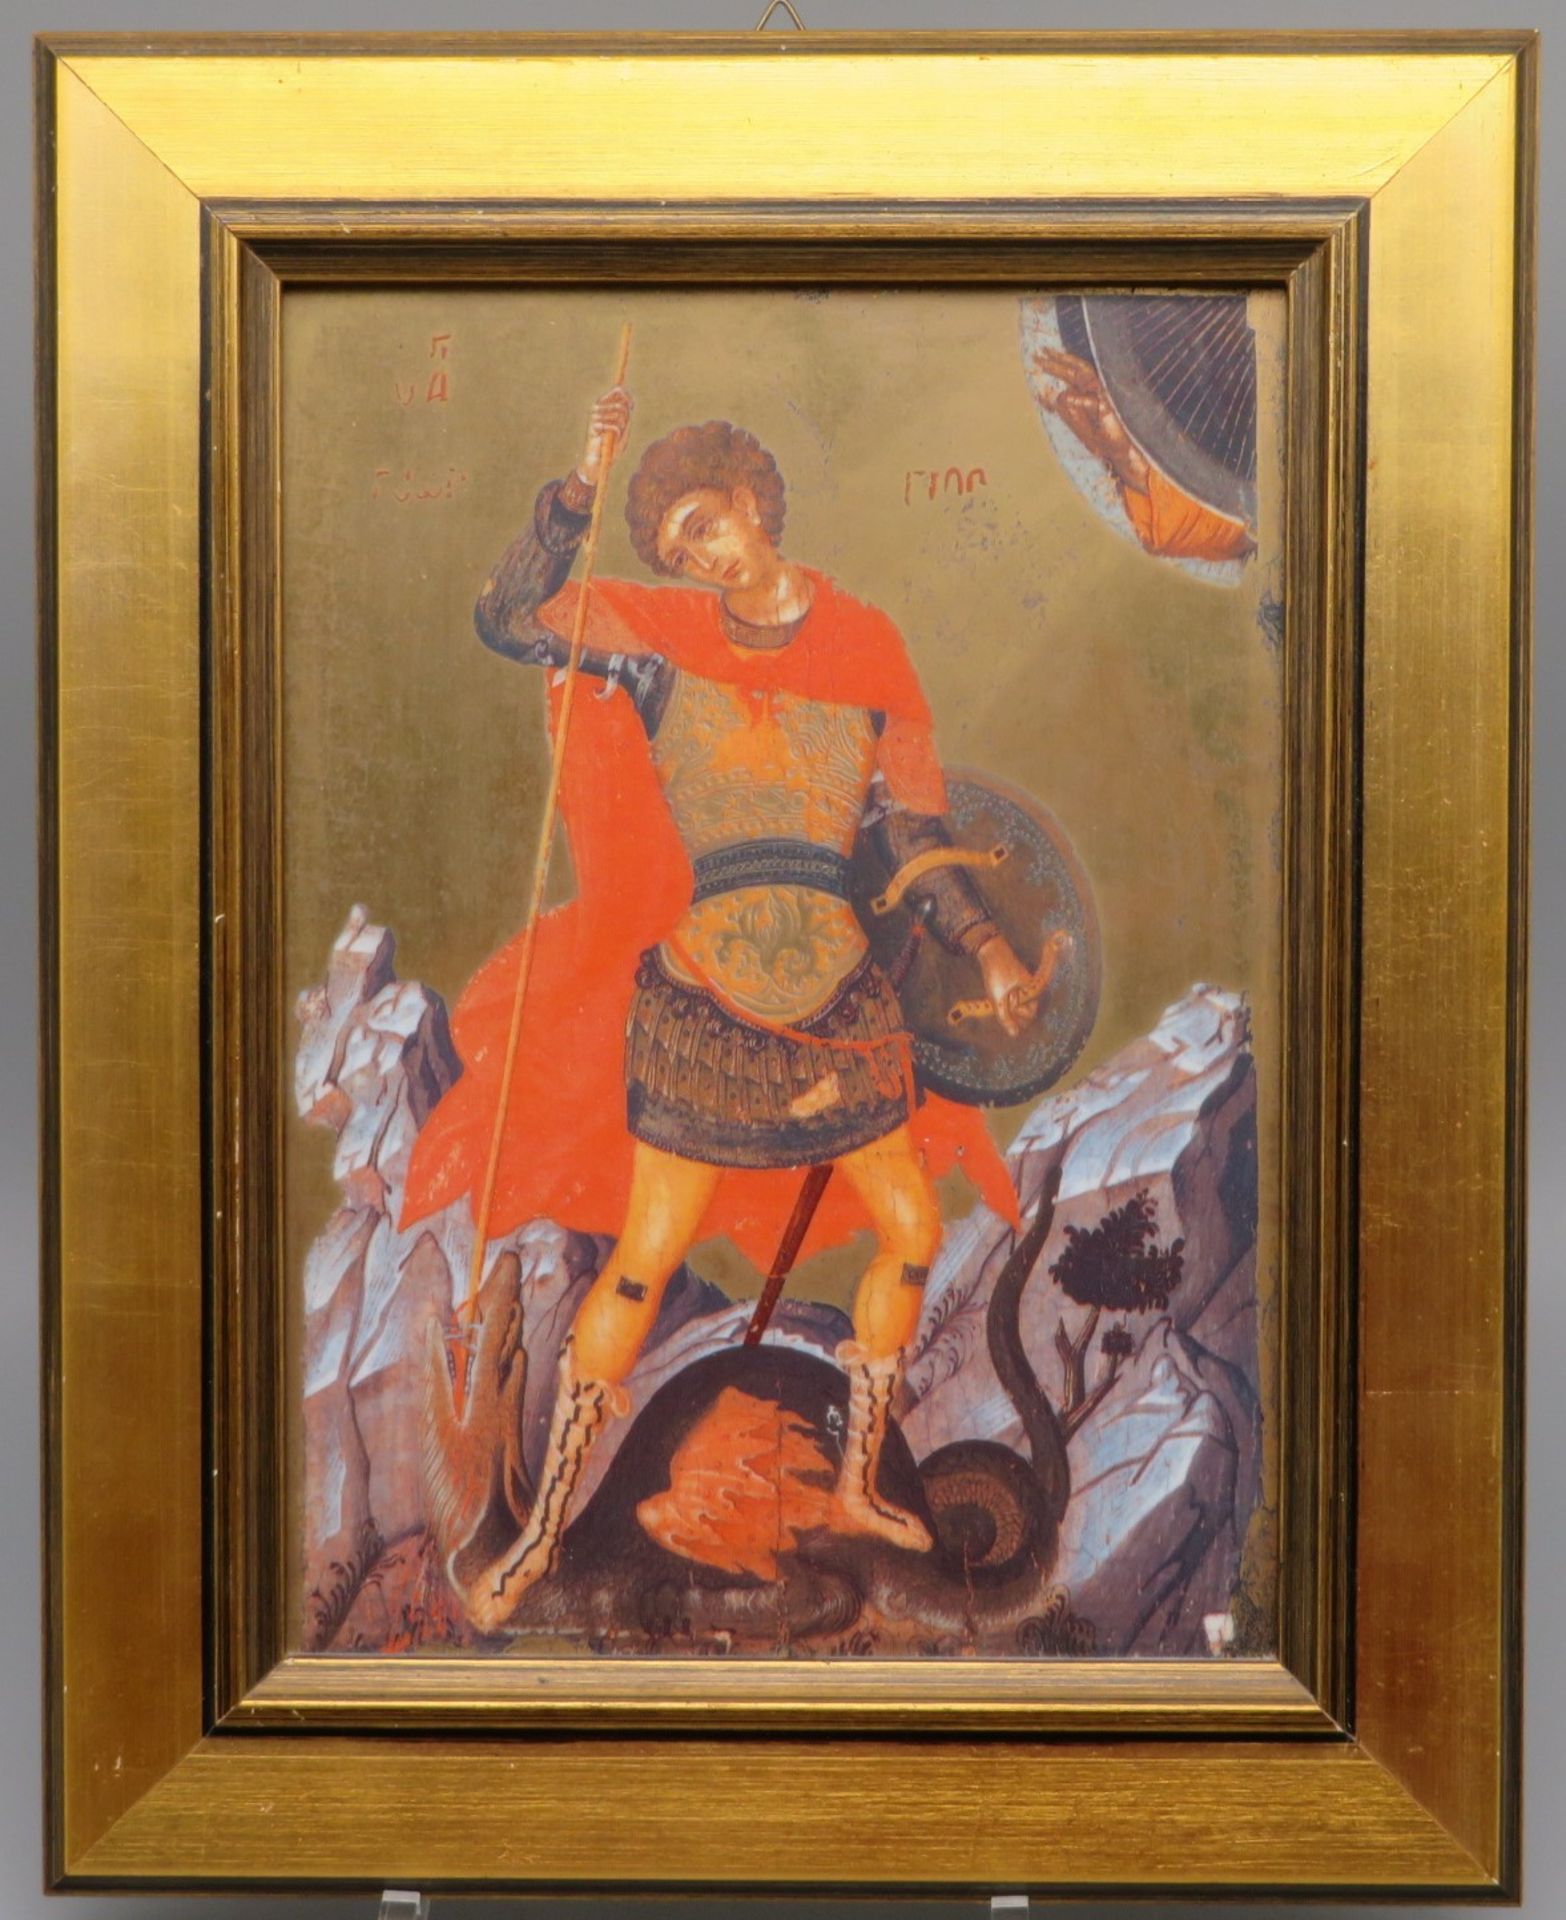 Porzellanikone, "Der Heilige Georg", Porzellan farbig lithografiert, limit. 334/1000, 24 x 17,5 cm,